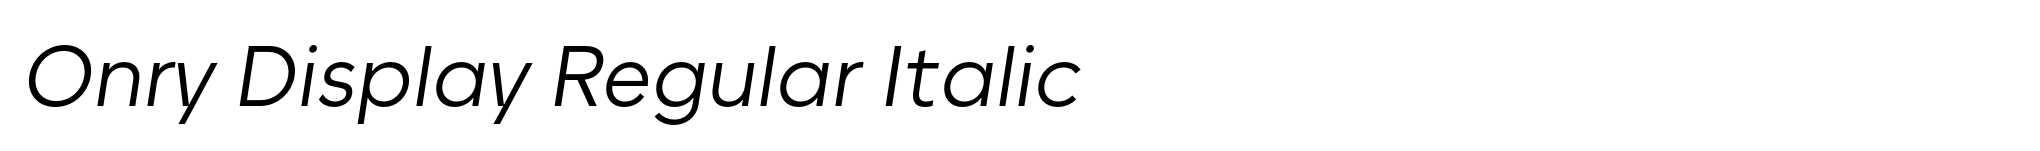 Onry Display Regular Italic image